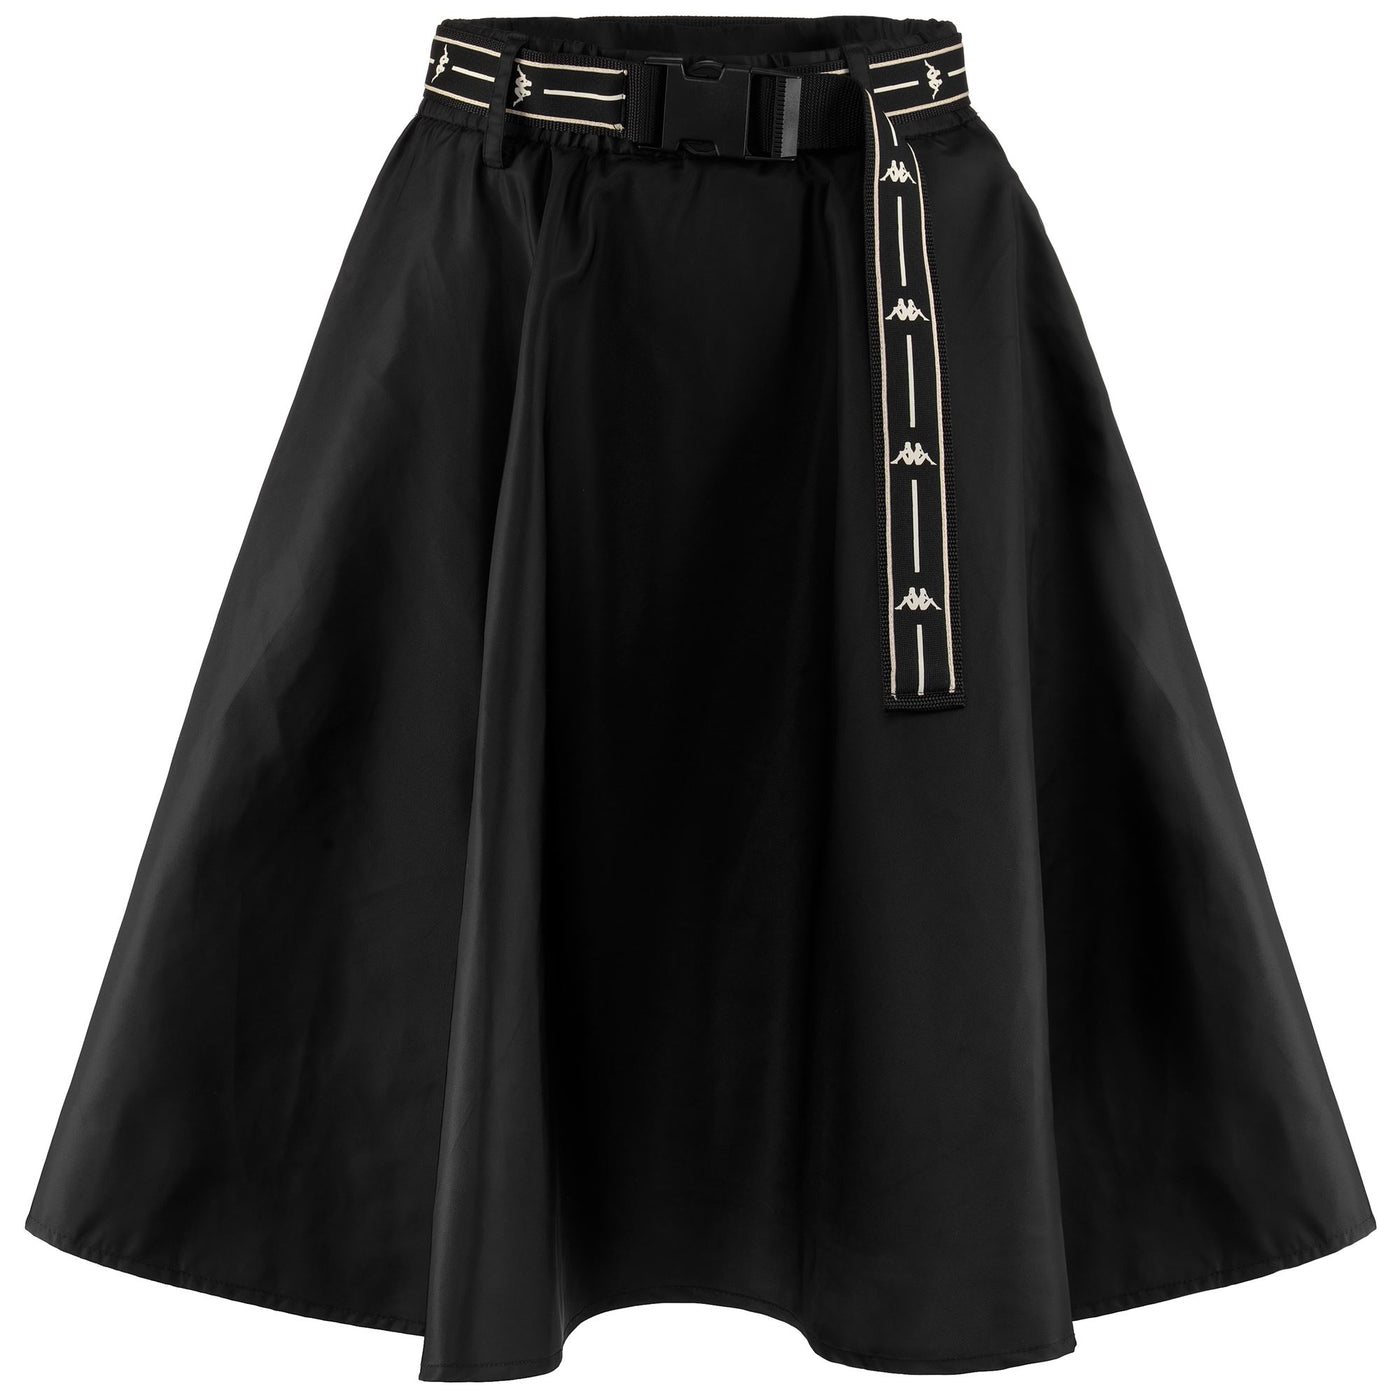 Skirts Woman AUTHENTIC JPN VERIDA Longuette BLACK Photo (jpg Rgb)			